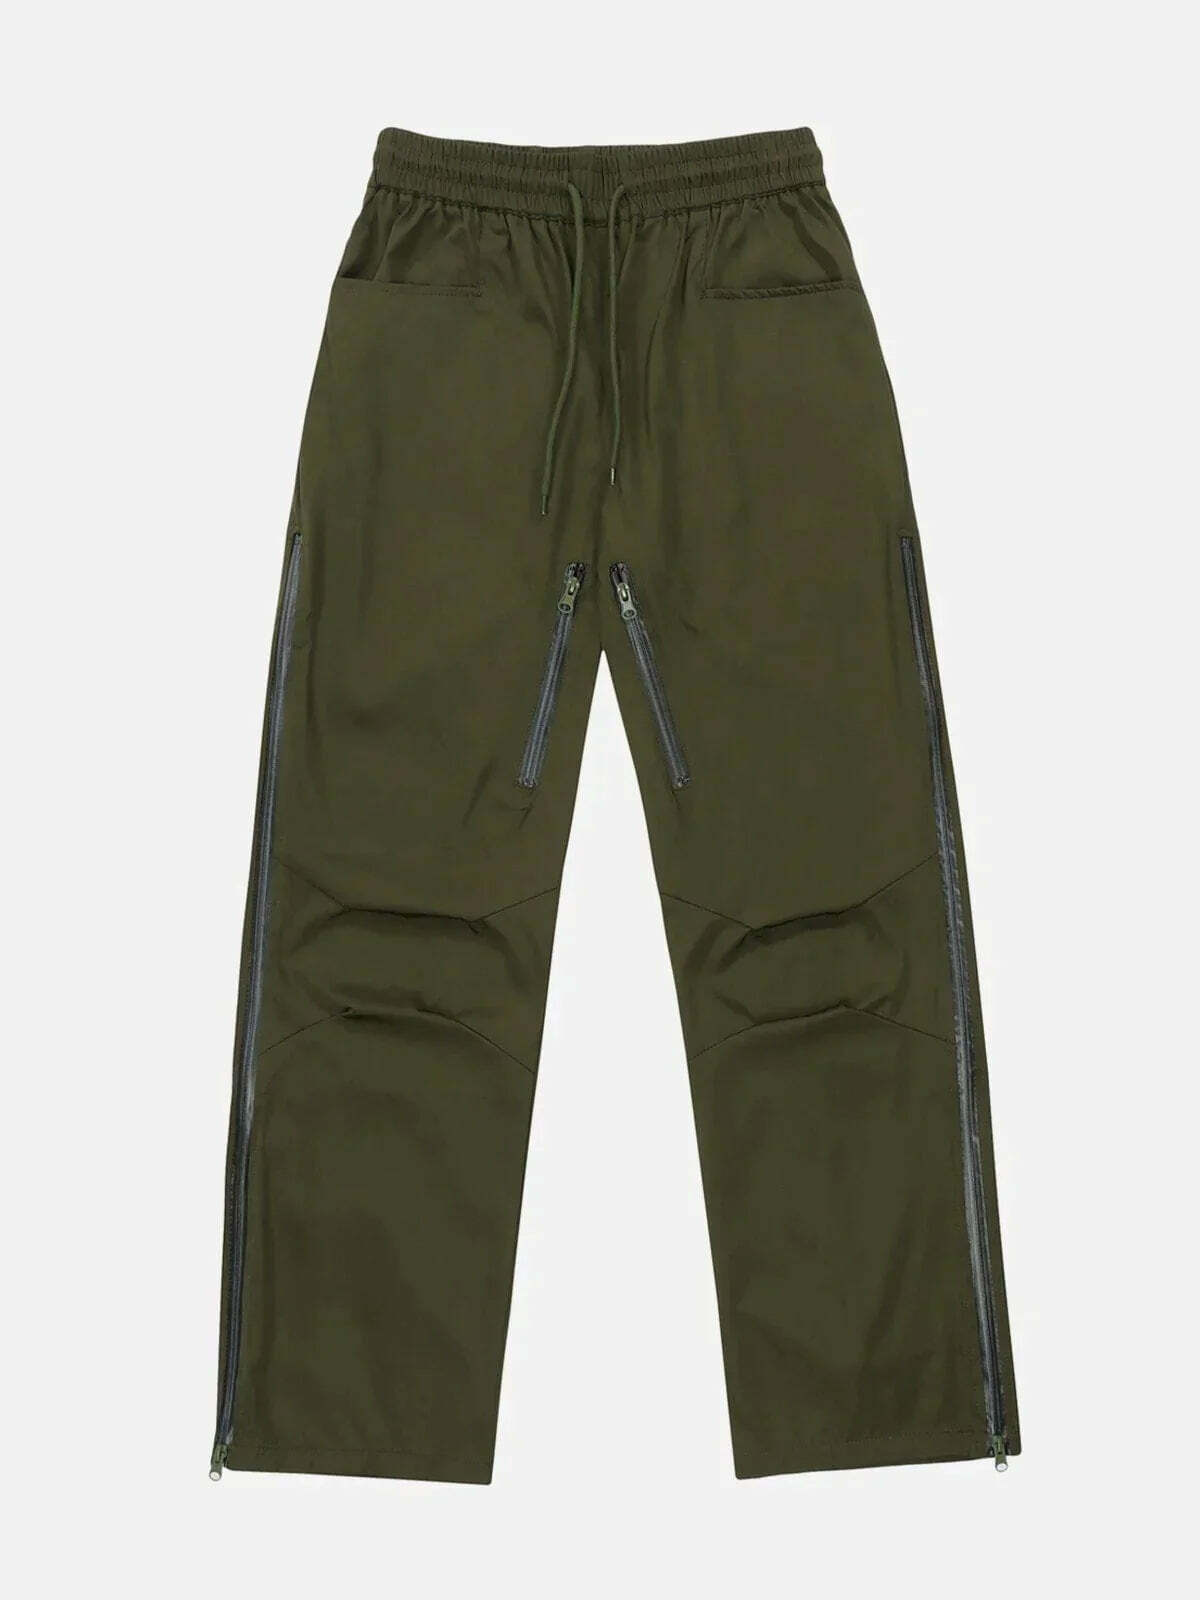 patchwork zipup pants edgy streetwear staple 2969